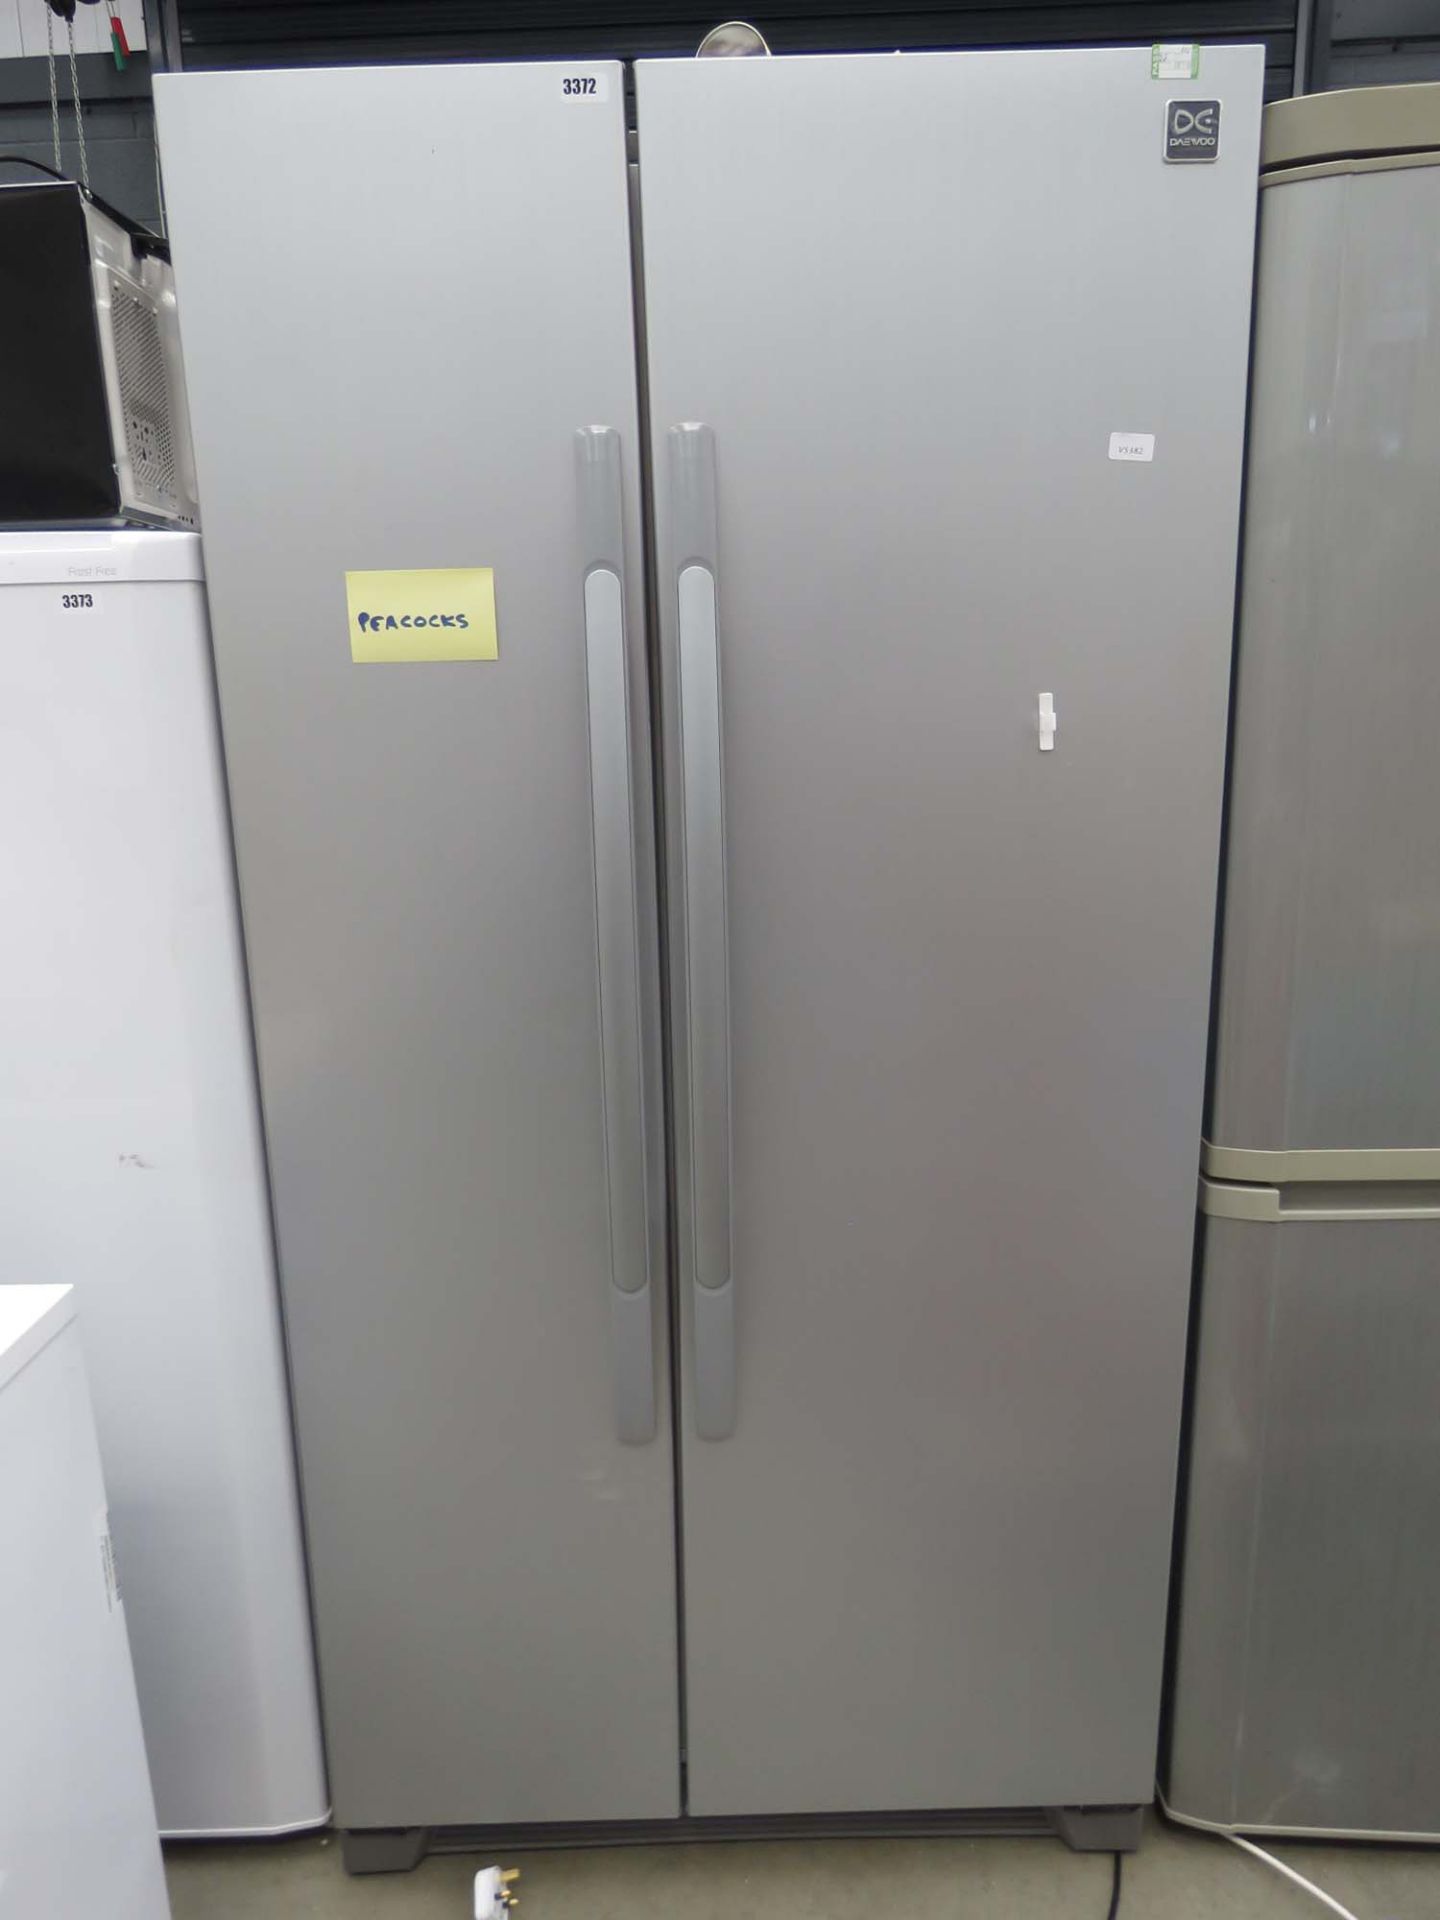 (111) Daewoo American style fridge freezer